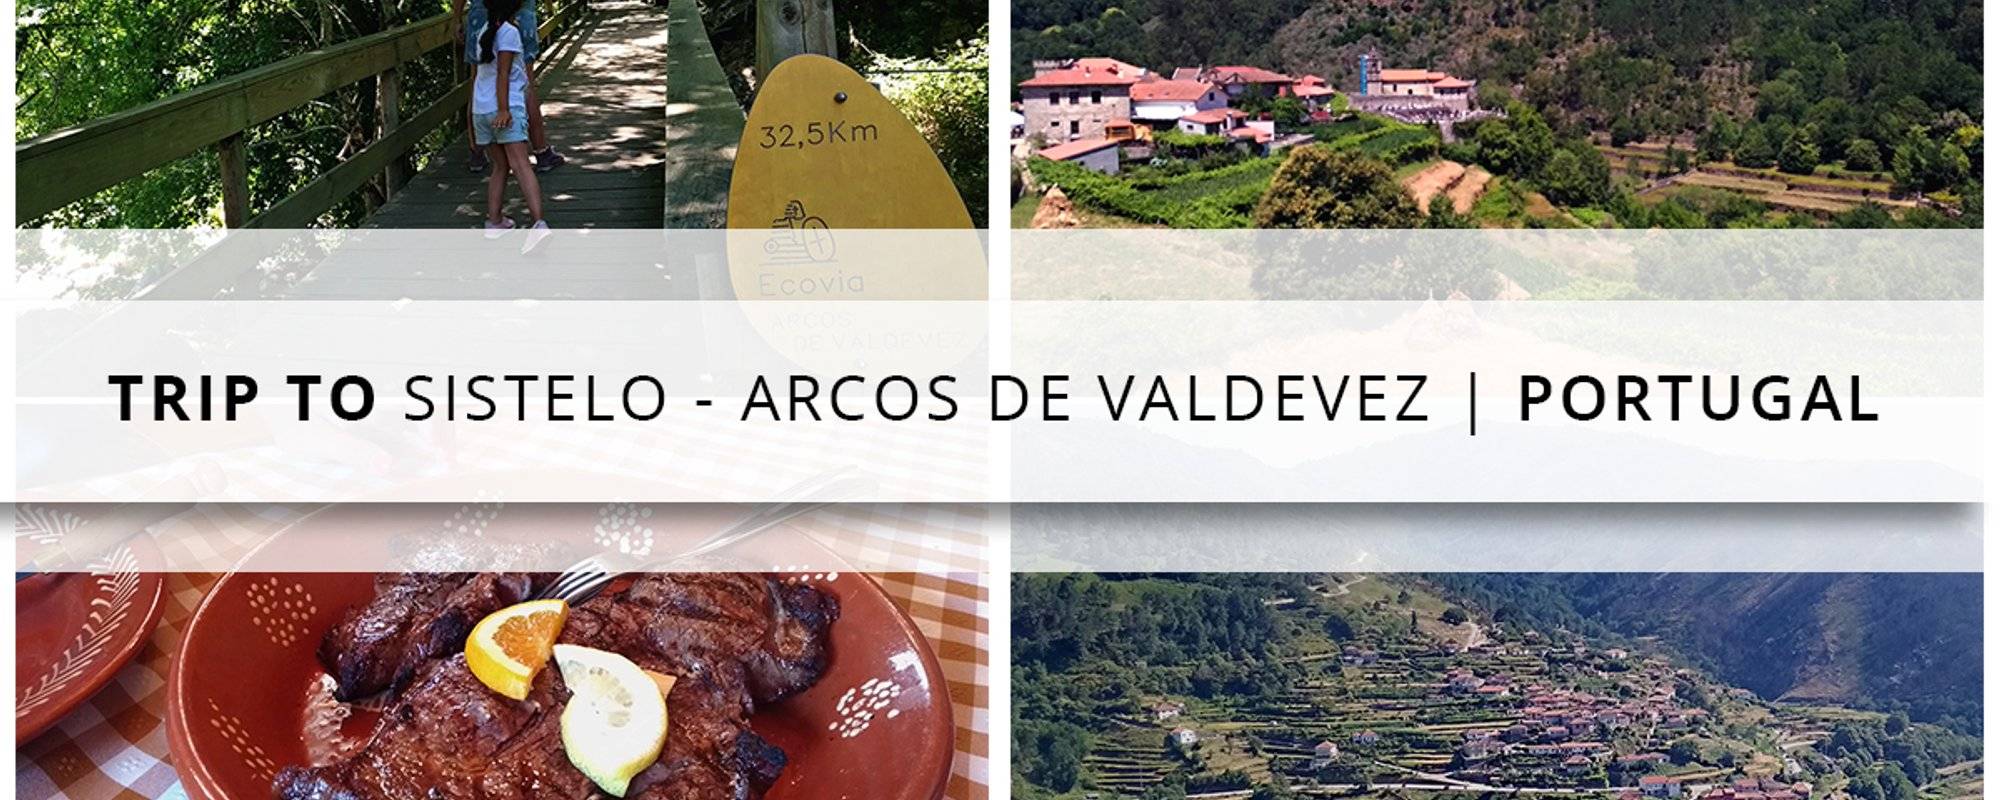 Trip to Sistelo - Arcos de Valdevez | Portugal